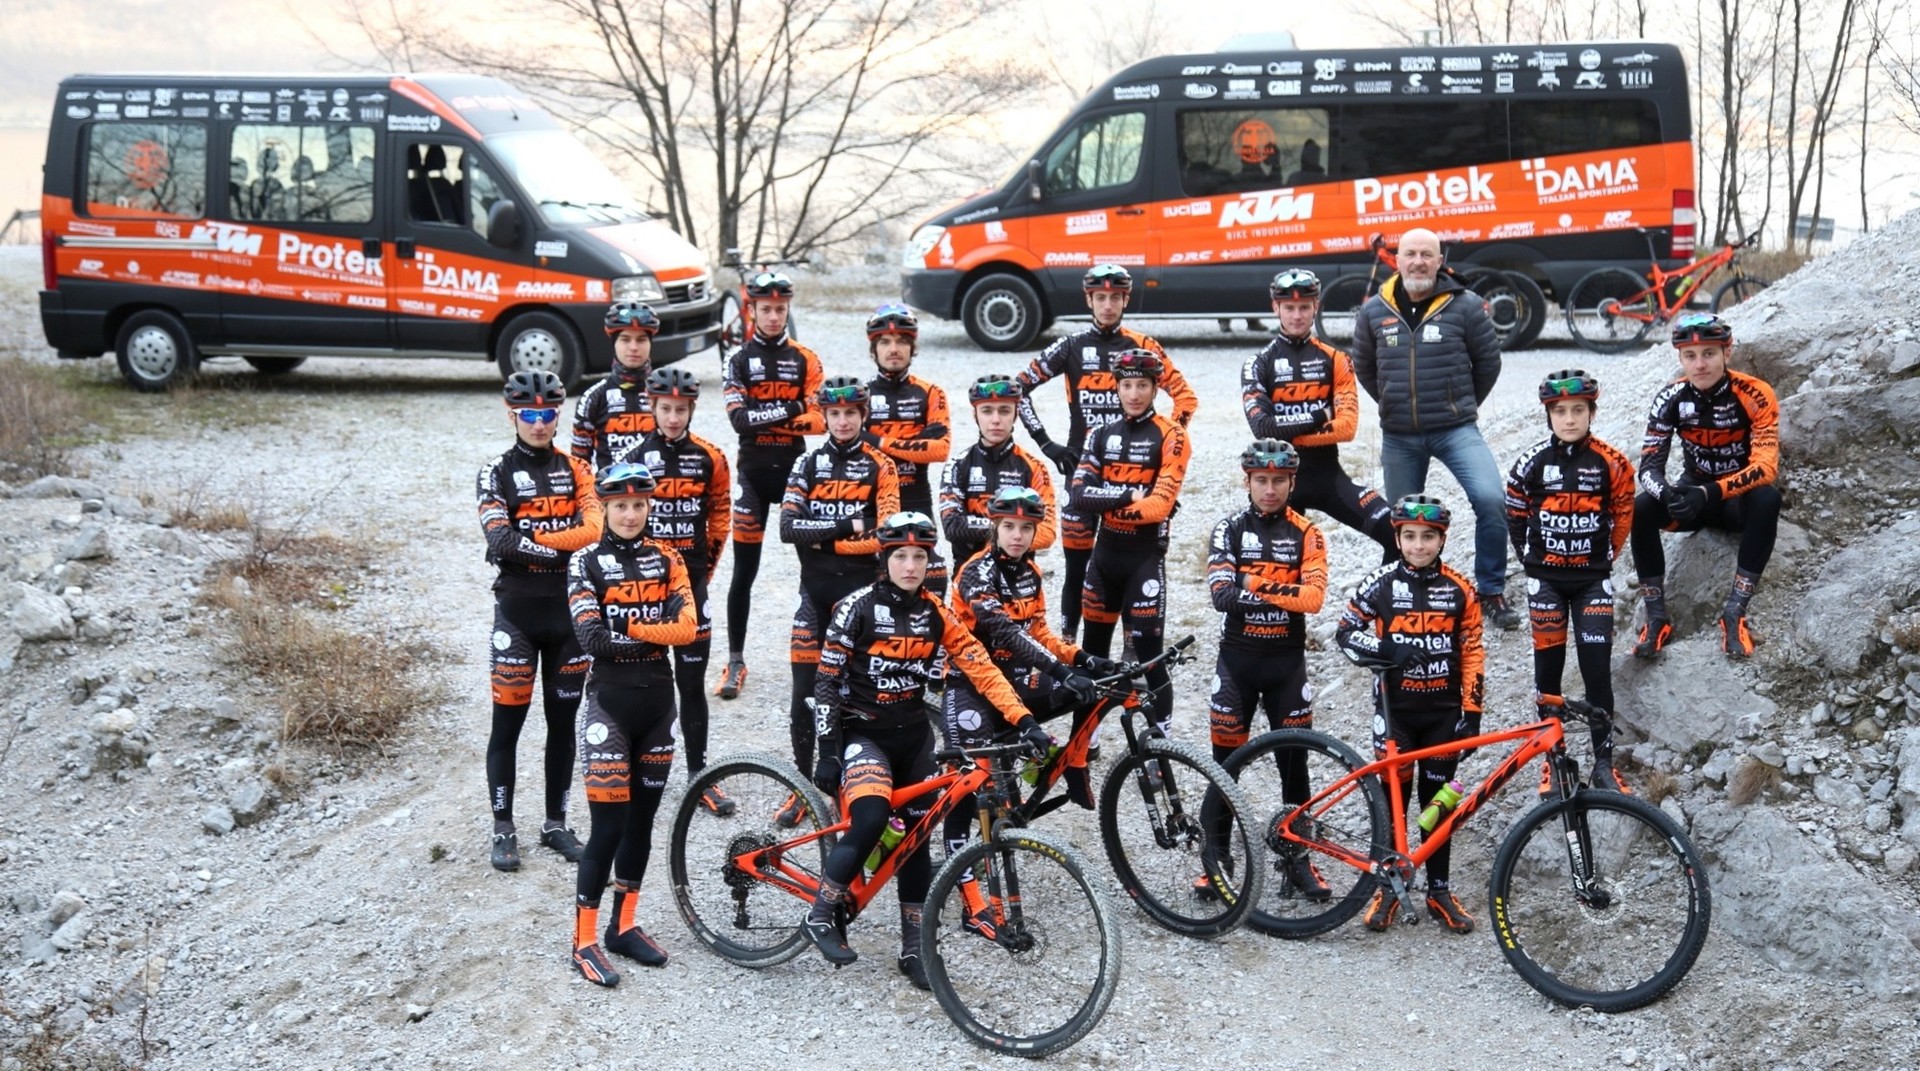 Team KTM Protek Dama